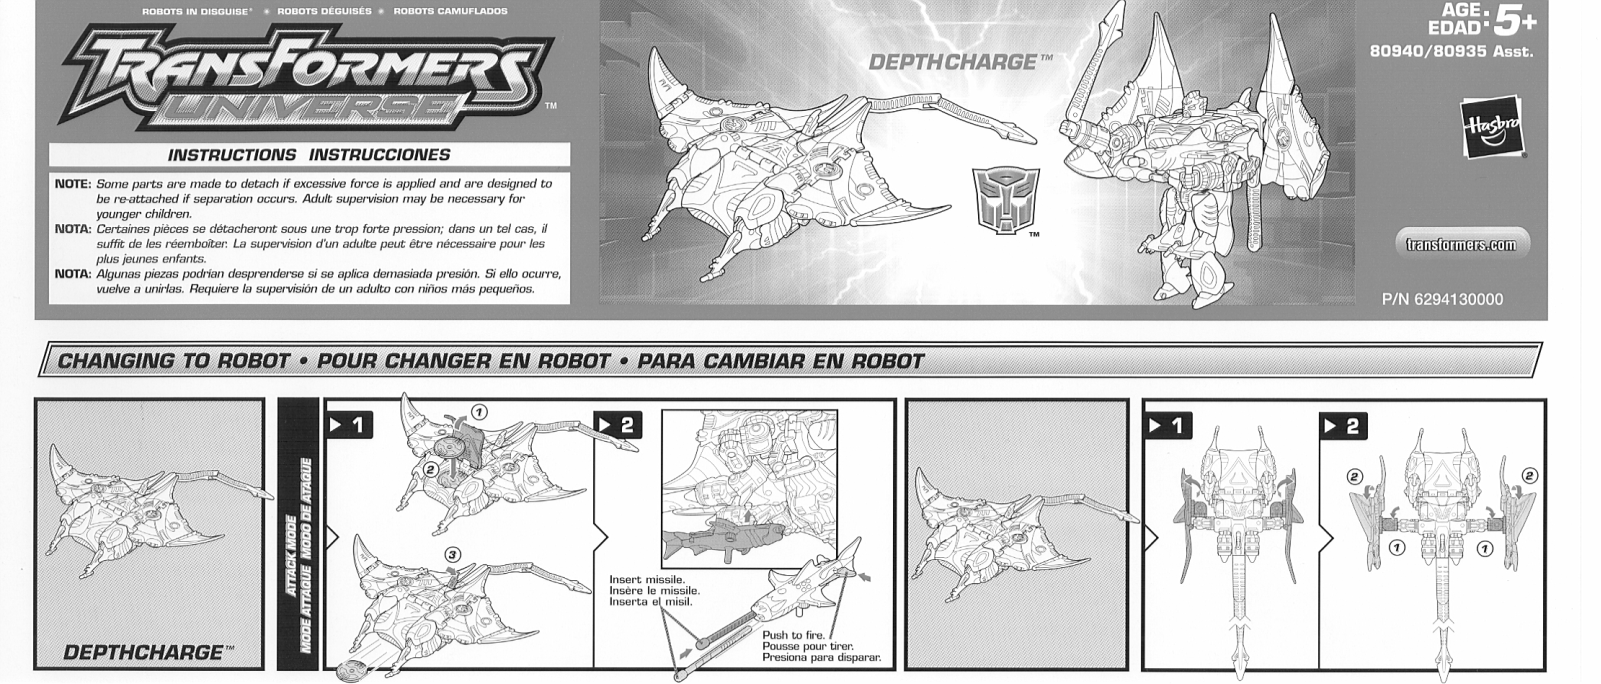 HASBRO Transformers Universe Depthcharge User Manual